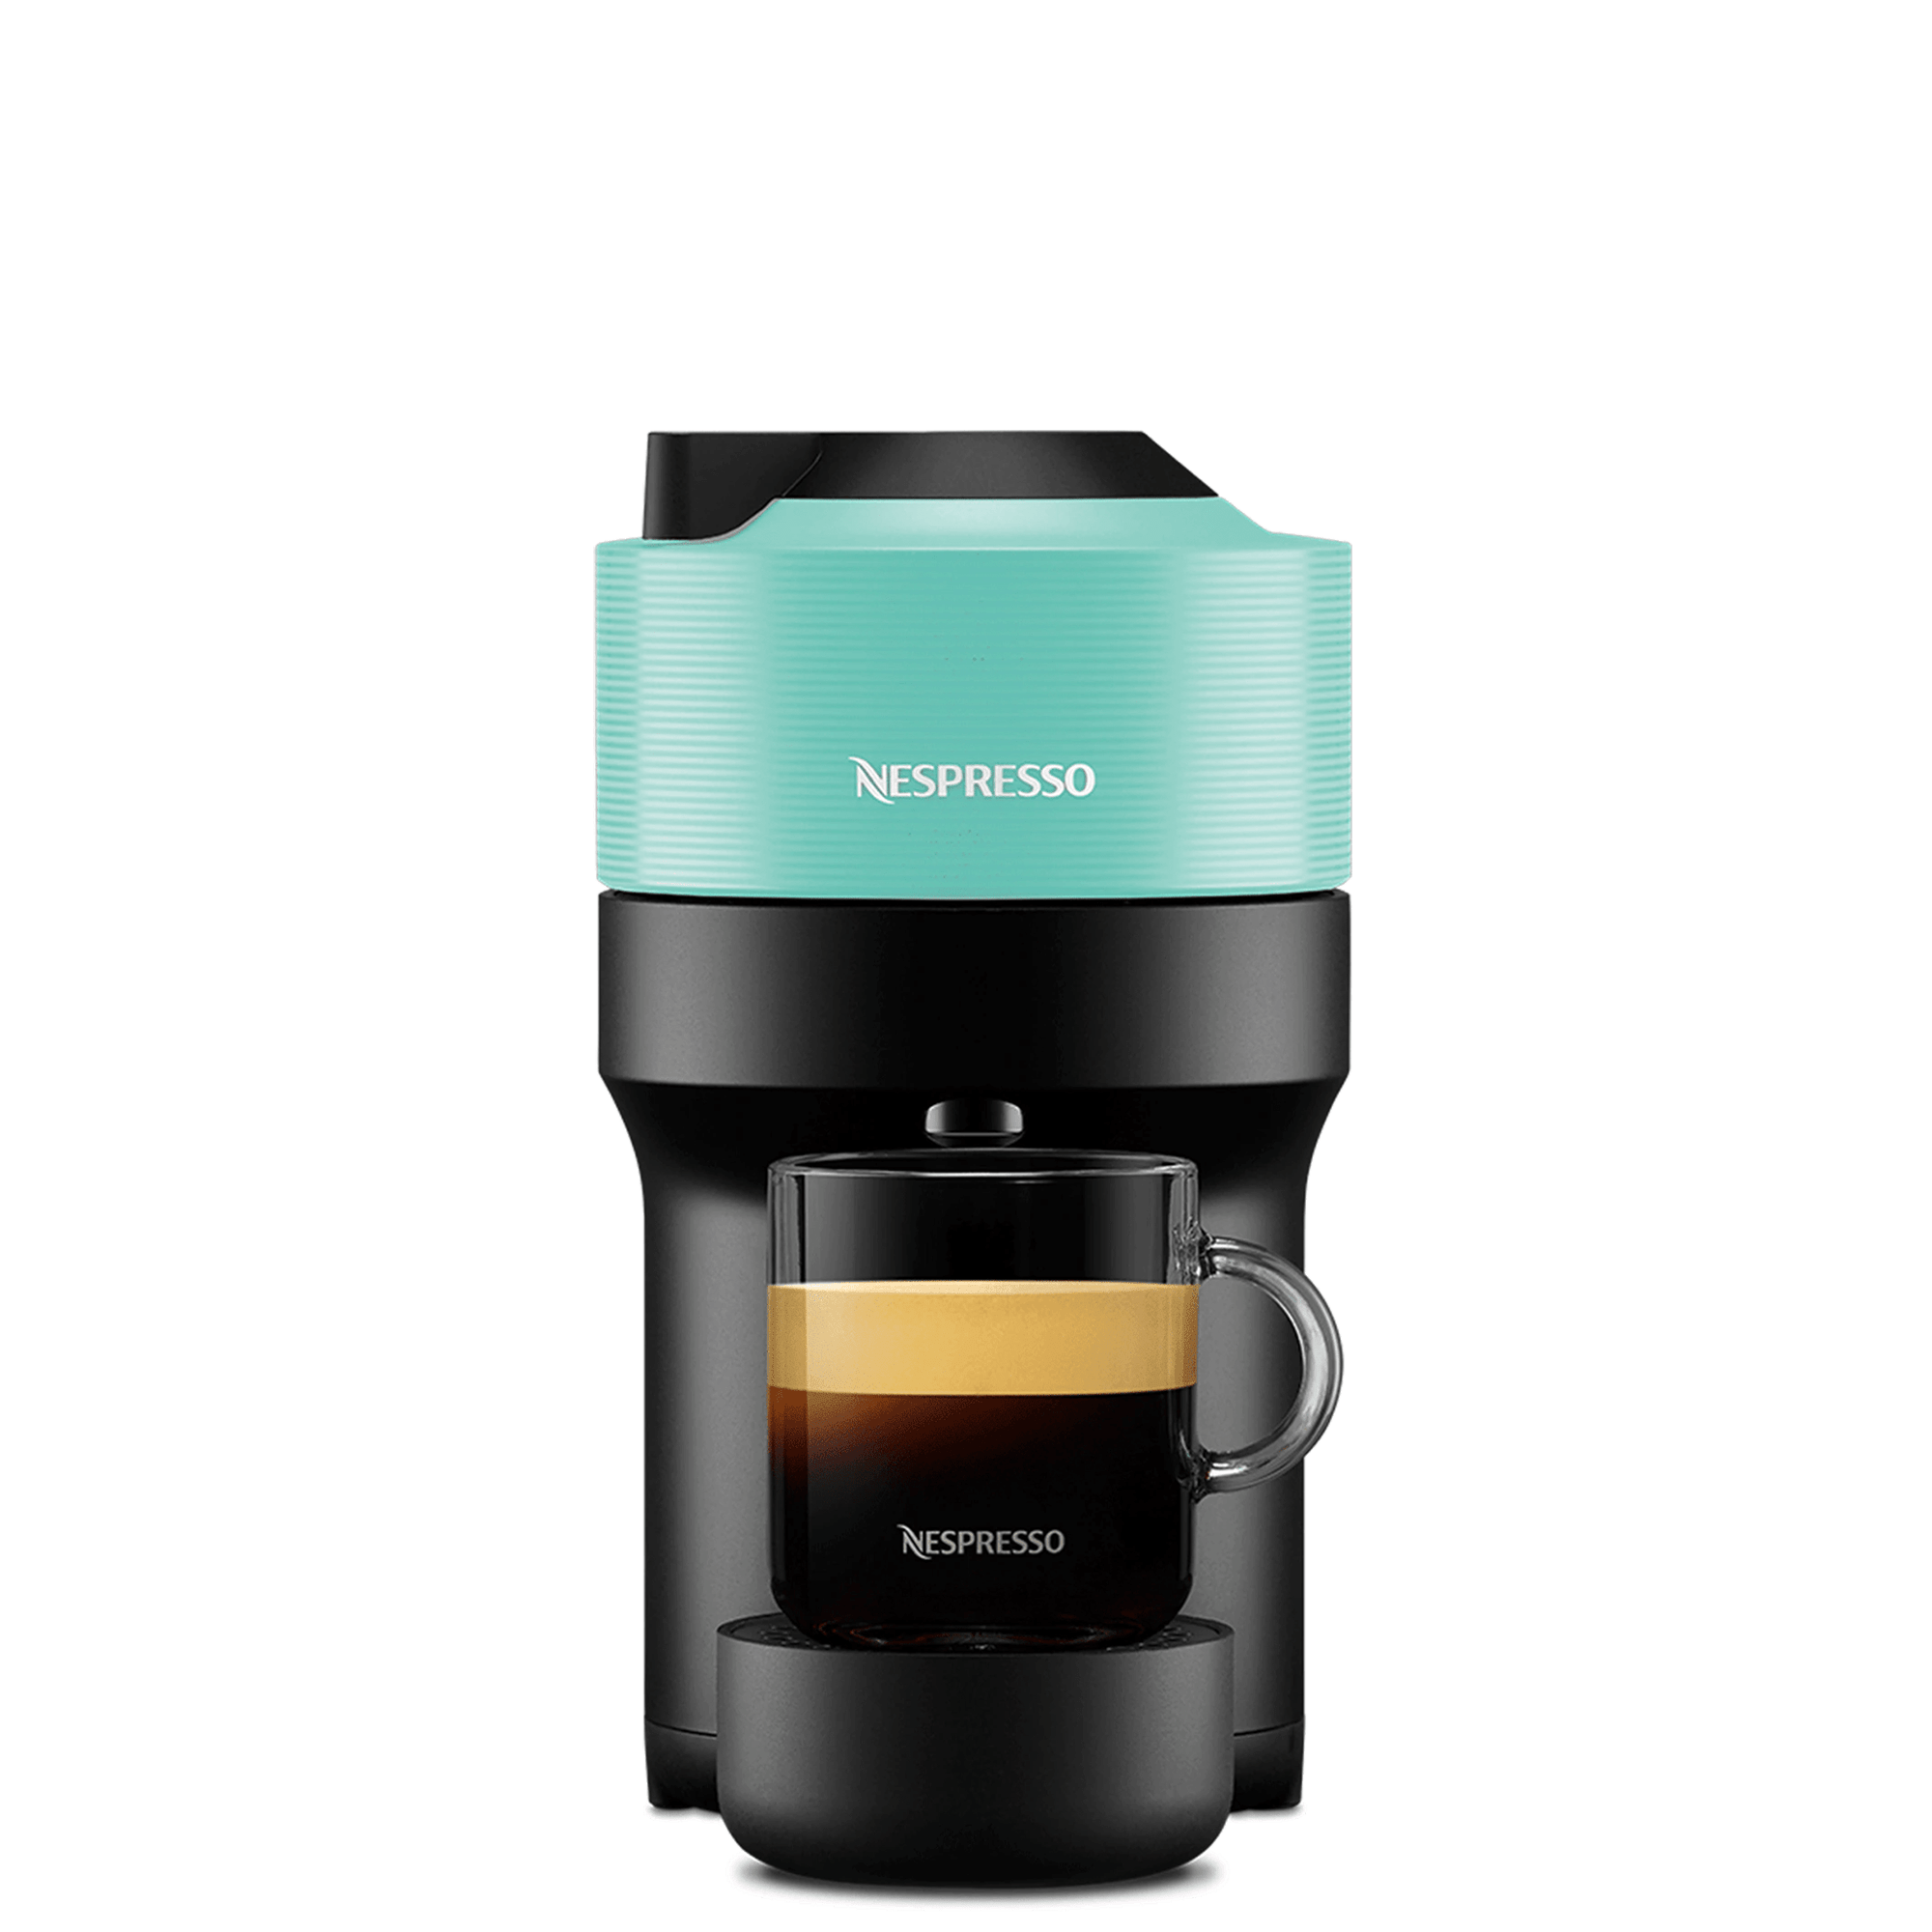 Here's Why You Need The New Nespresso Vertuo Pop - Grazia Singapore